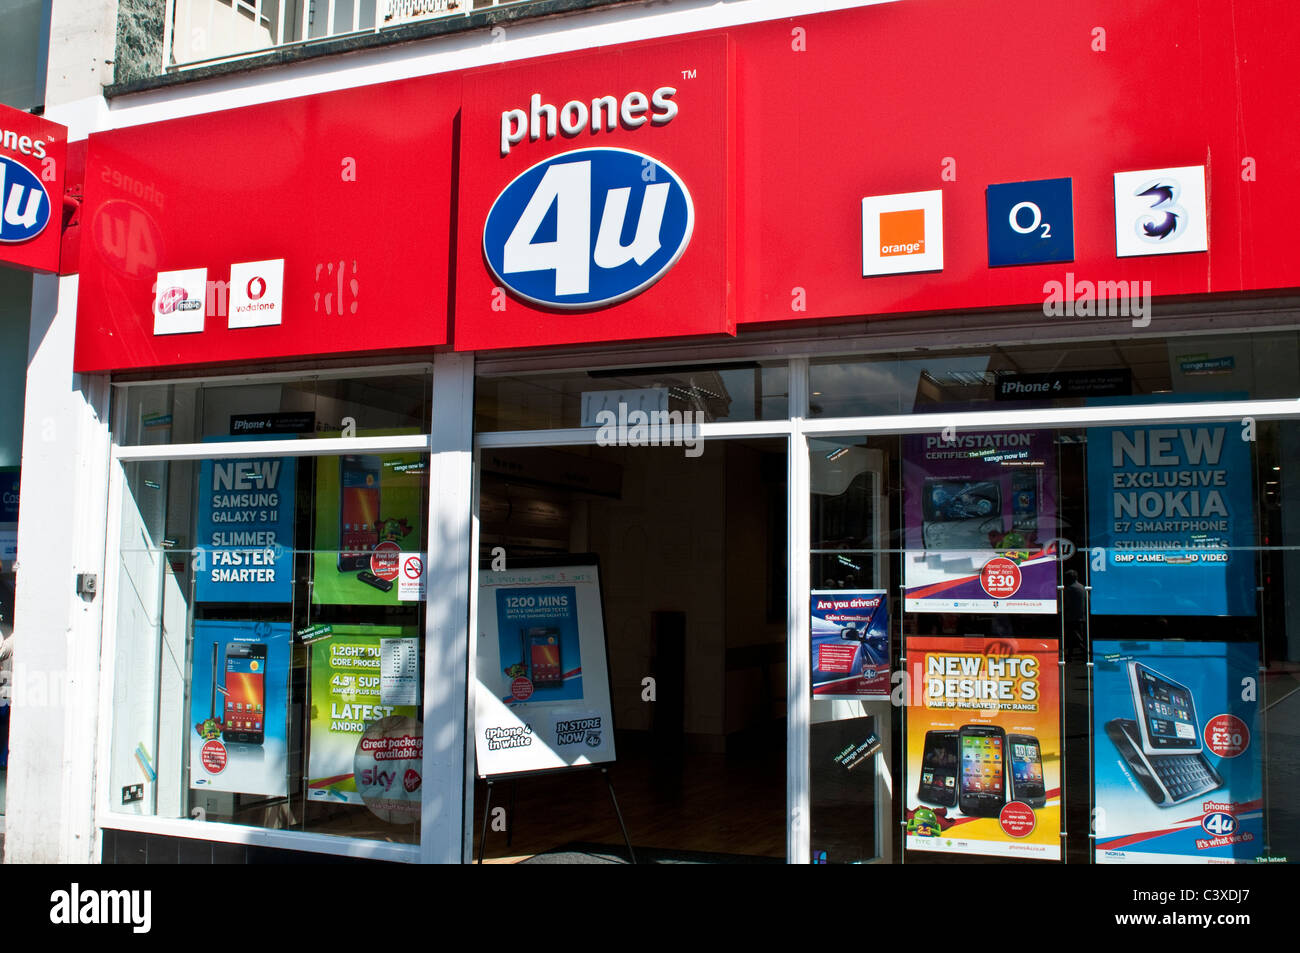 Phones 4u store, Kingston upon Thames, Surrey, UK Stock Photo